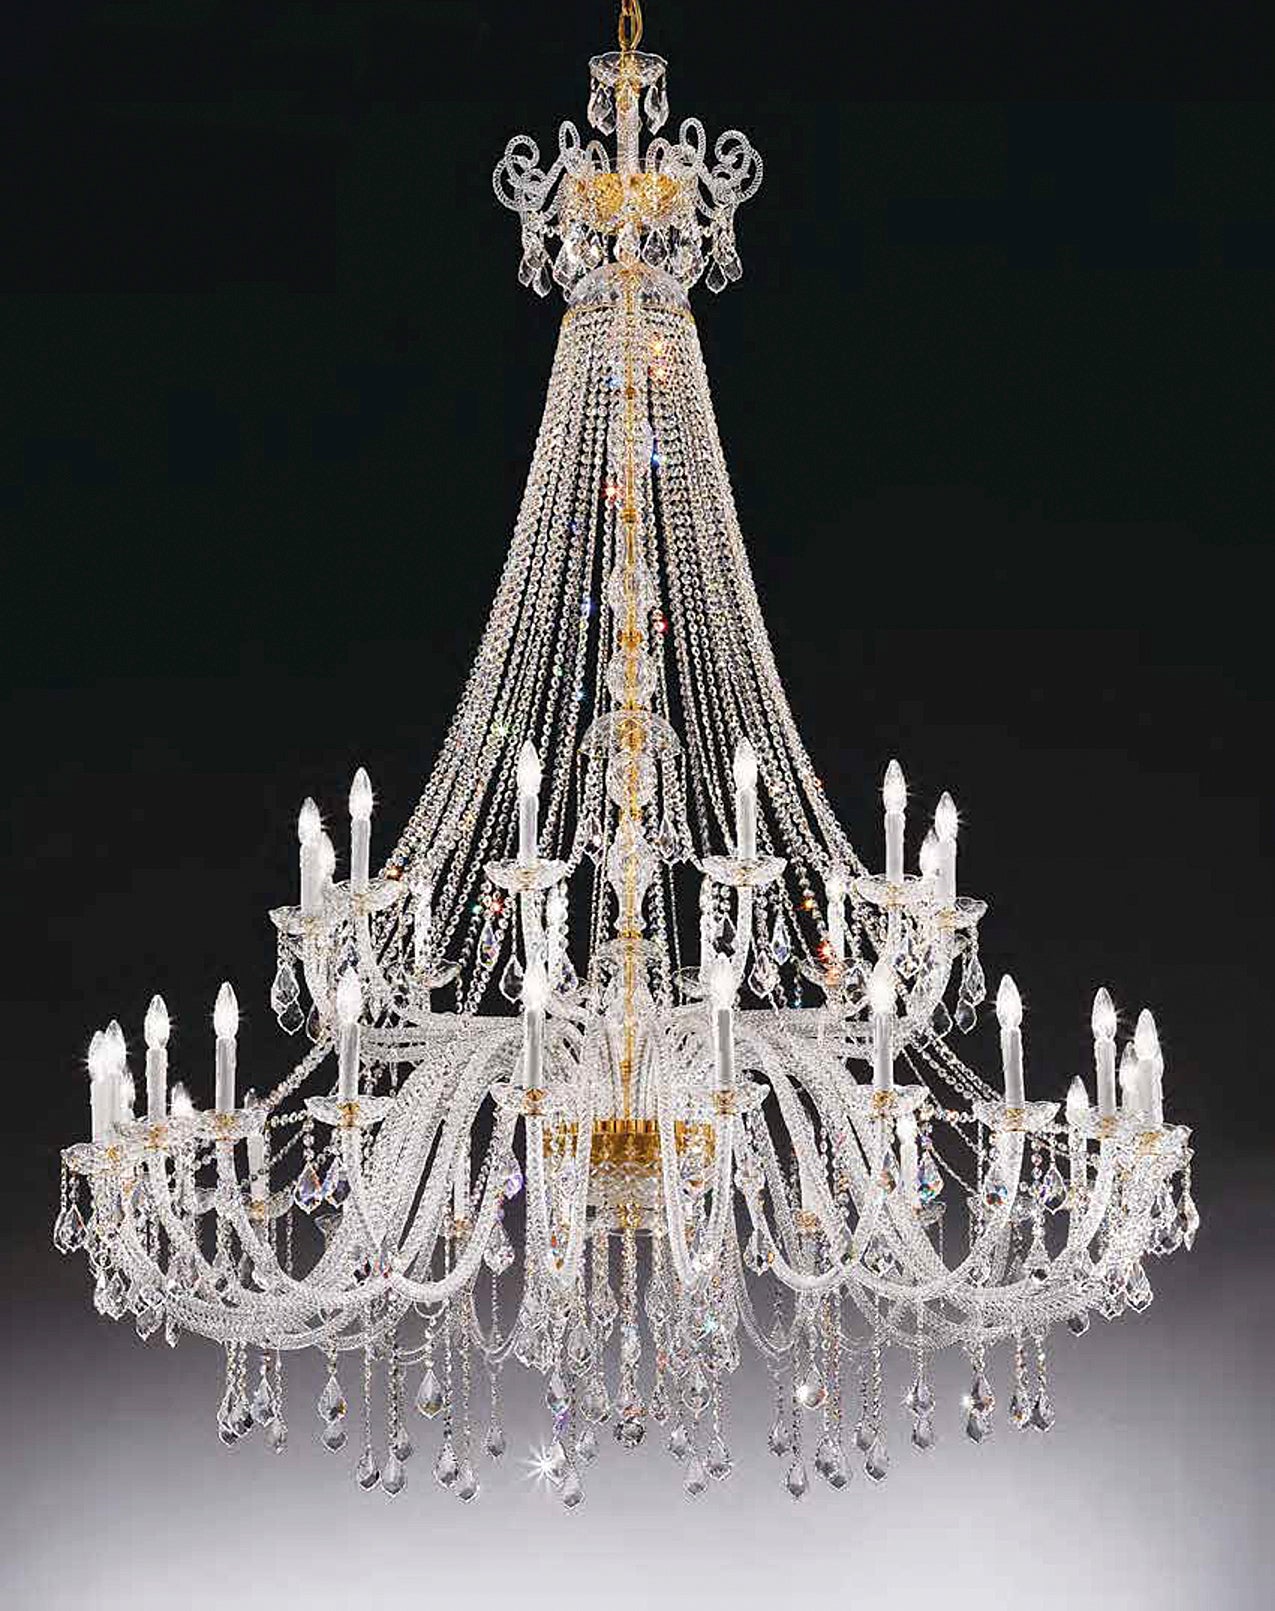 Italian made crystal chandelier #520836